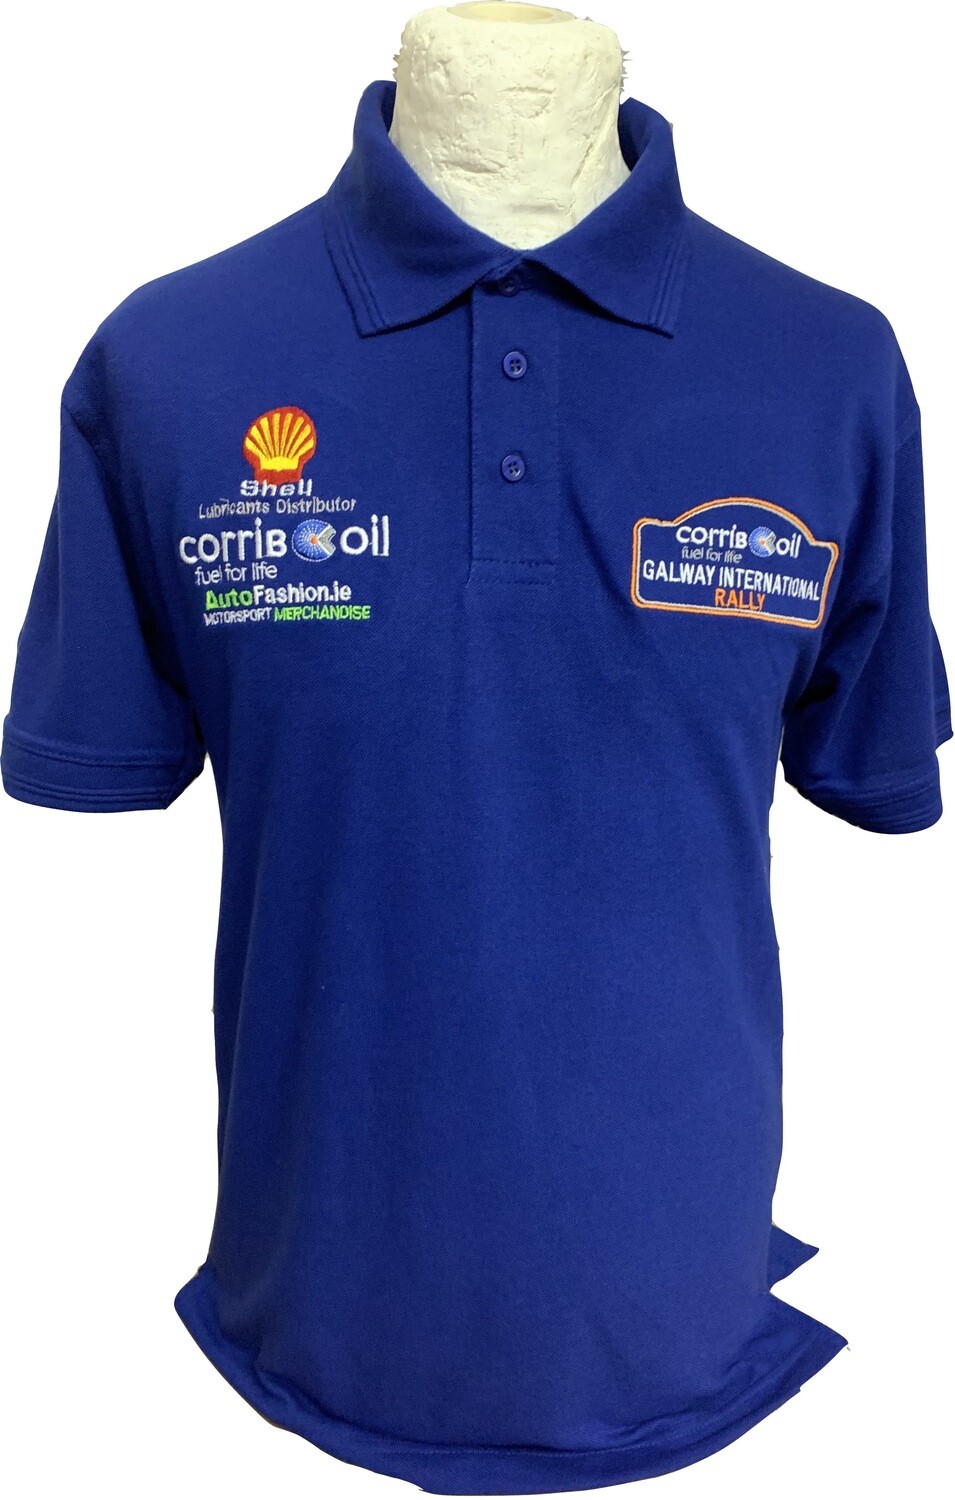 CORRIB OIL GALWAY INTL RALLY polo shirt cotton